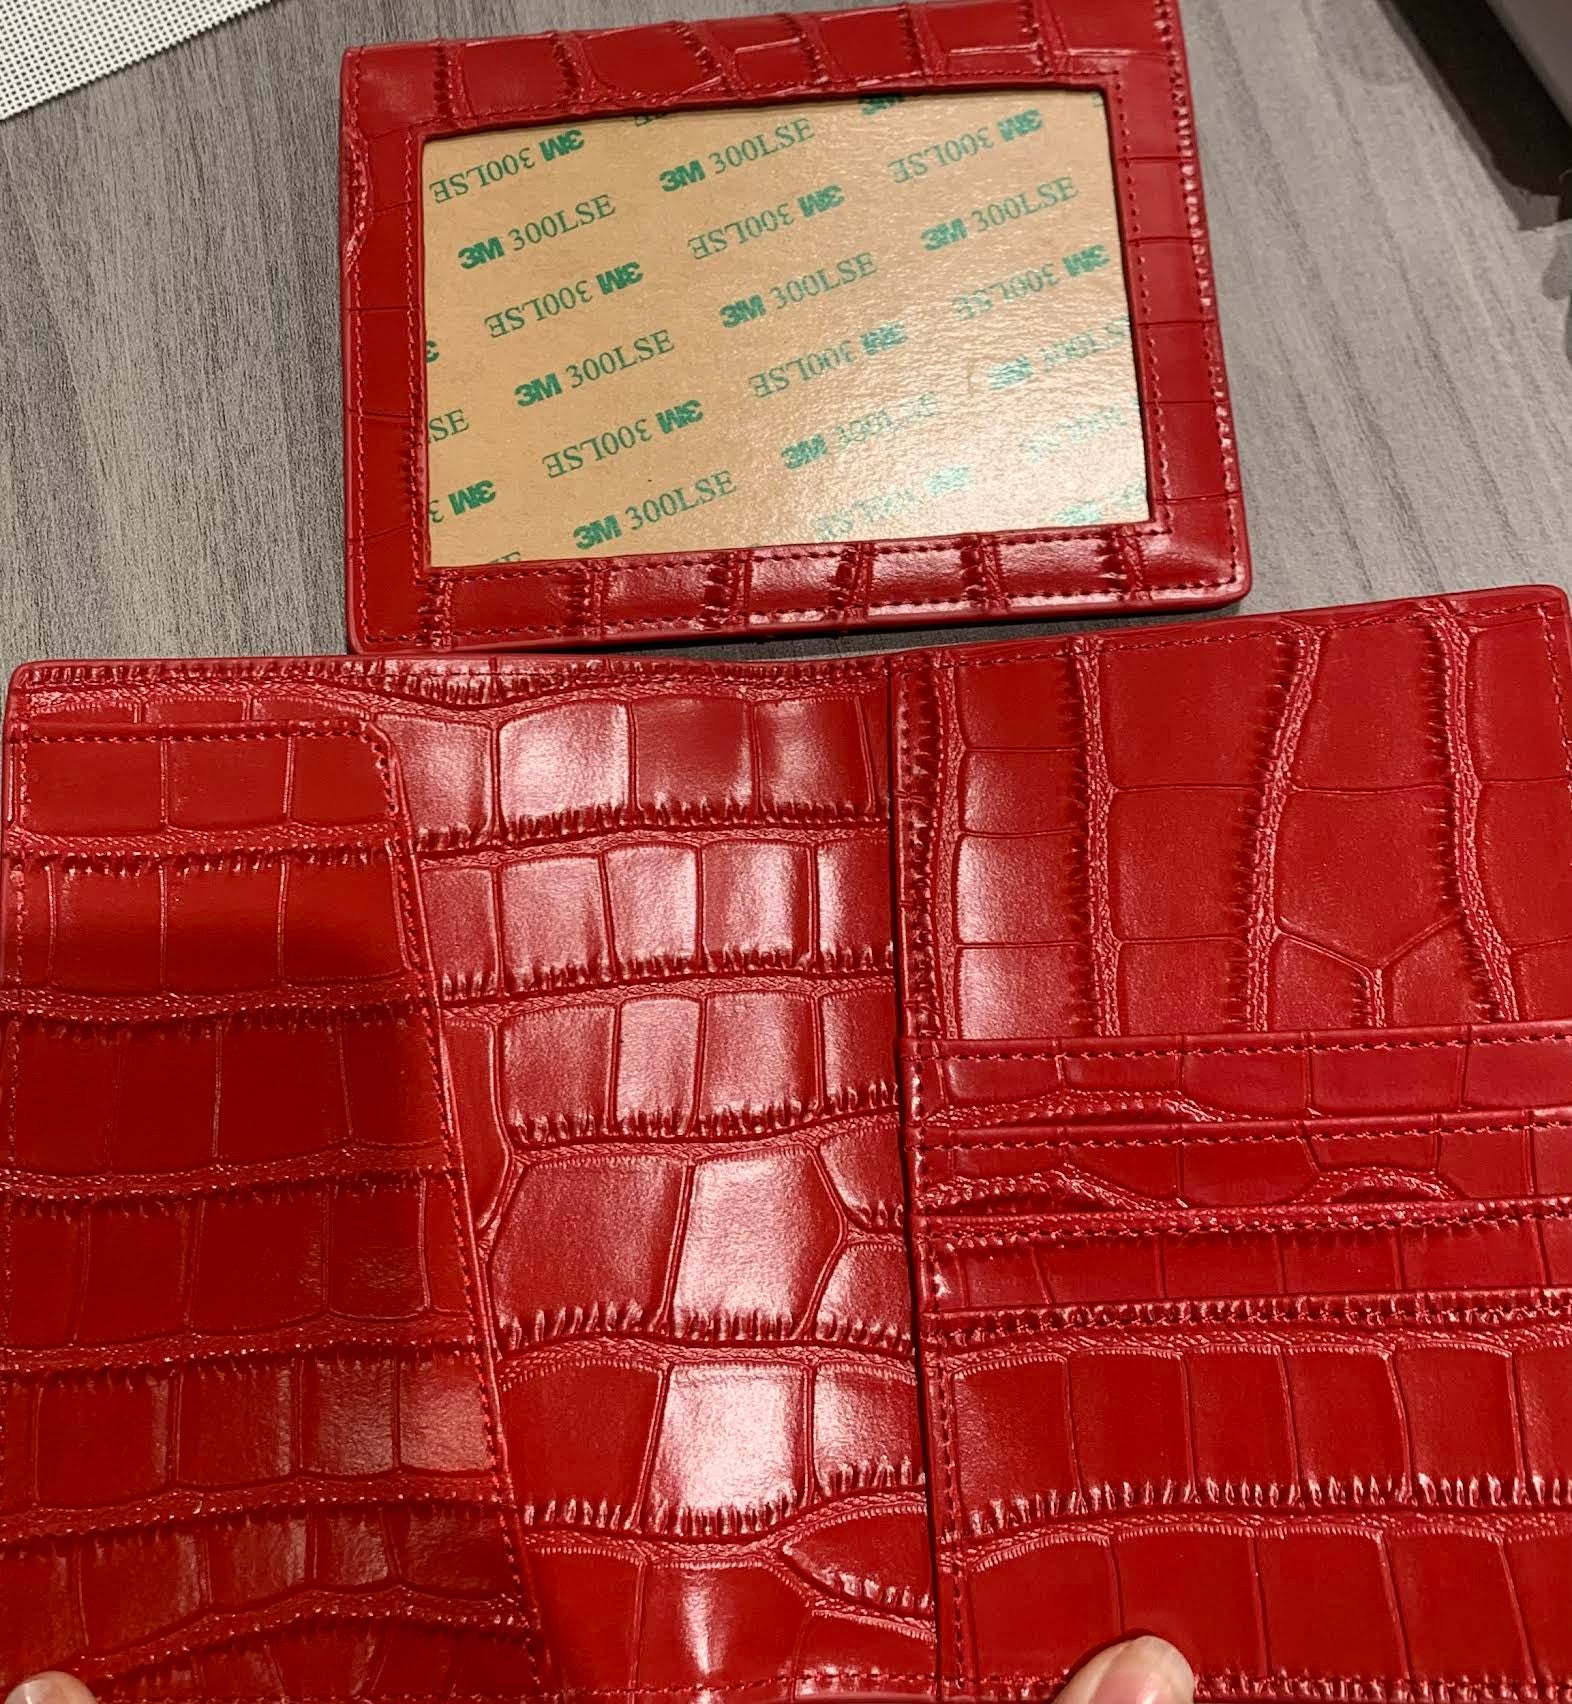 Rachel Barri Passport Leather - Red Croc